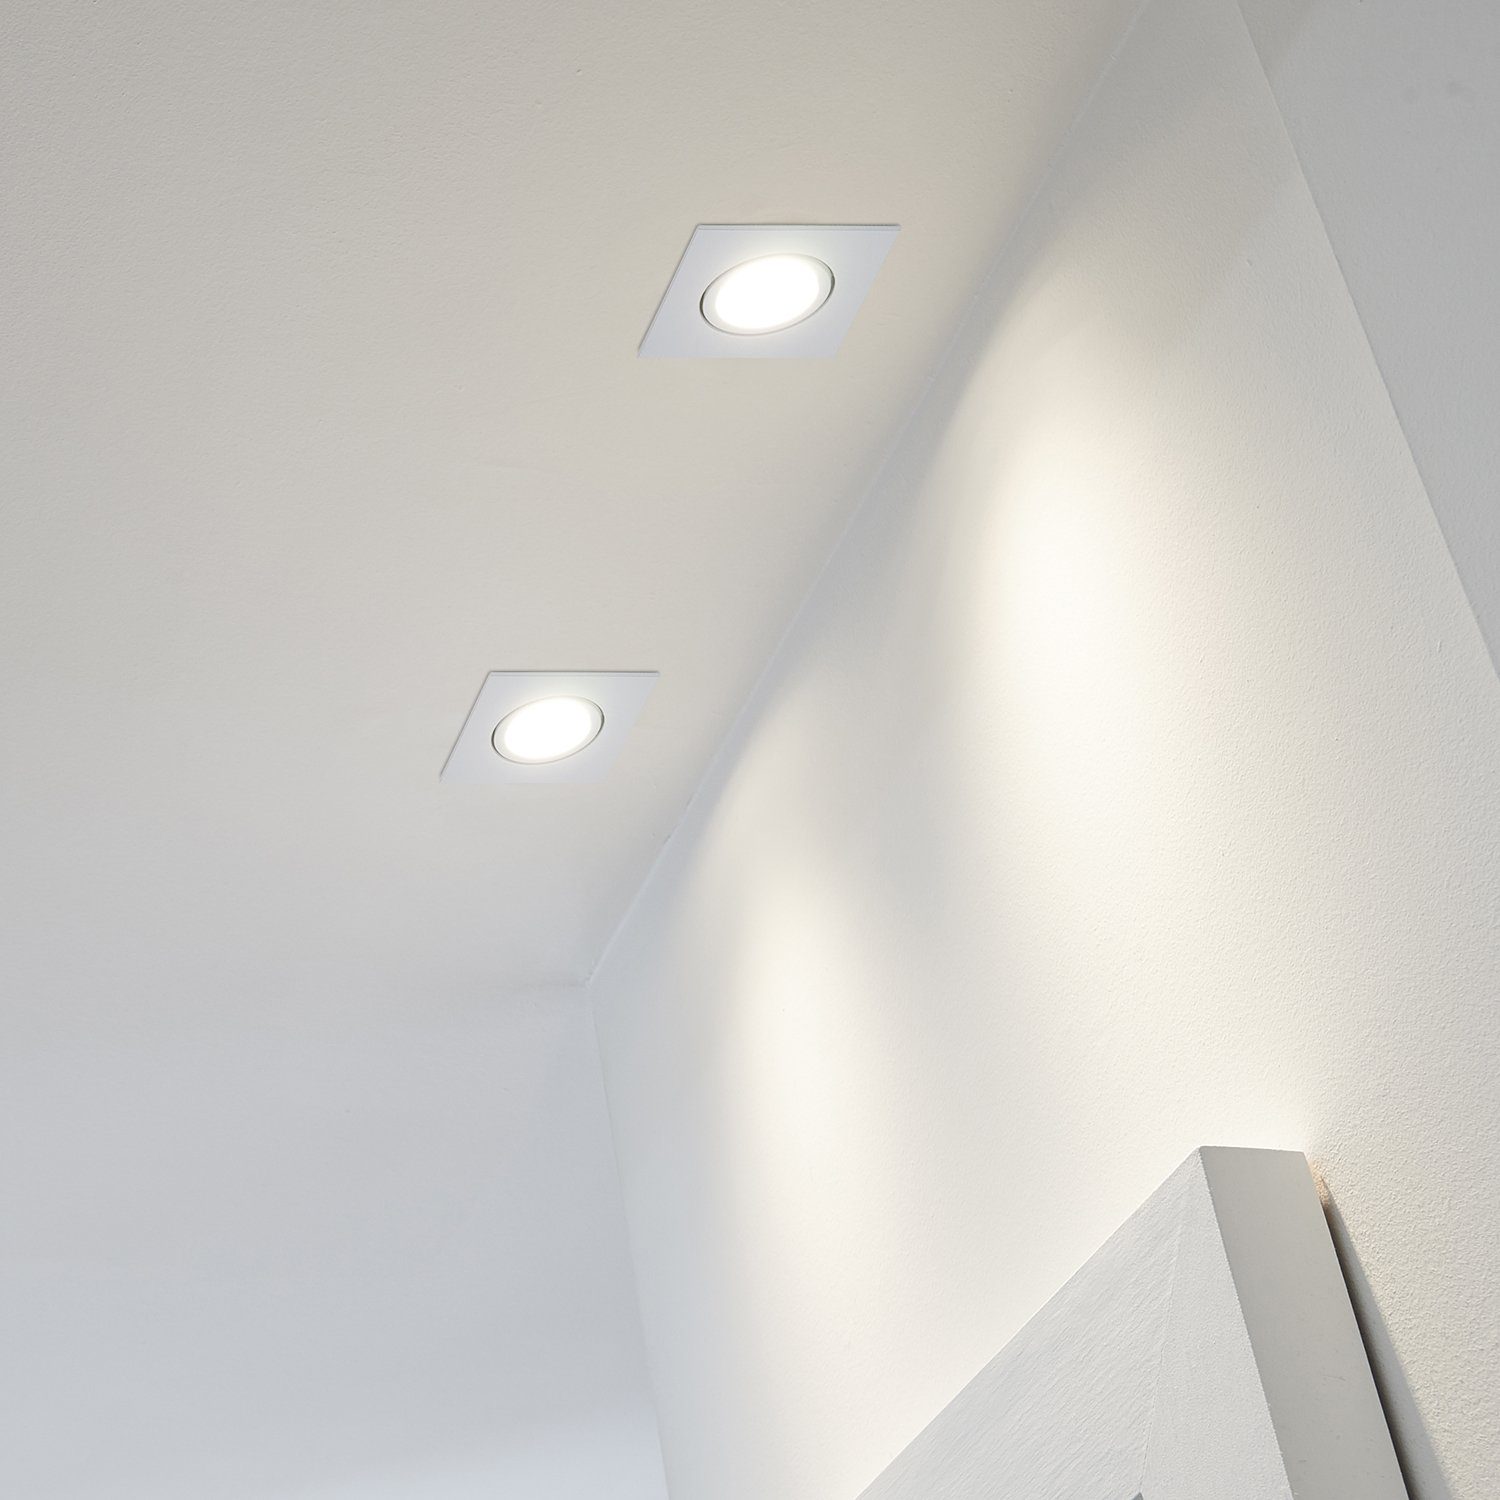 LEDANDO LED Einbaustrahler 10er LED Einbaustrahler Set Weiß mit LED GU10 Markenstrahler von LEDAN | Strahler